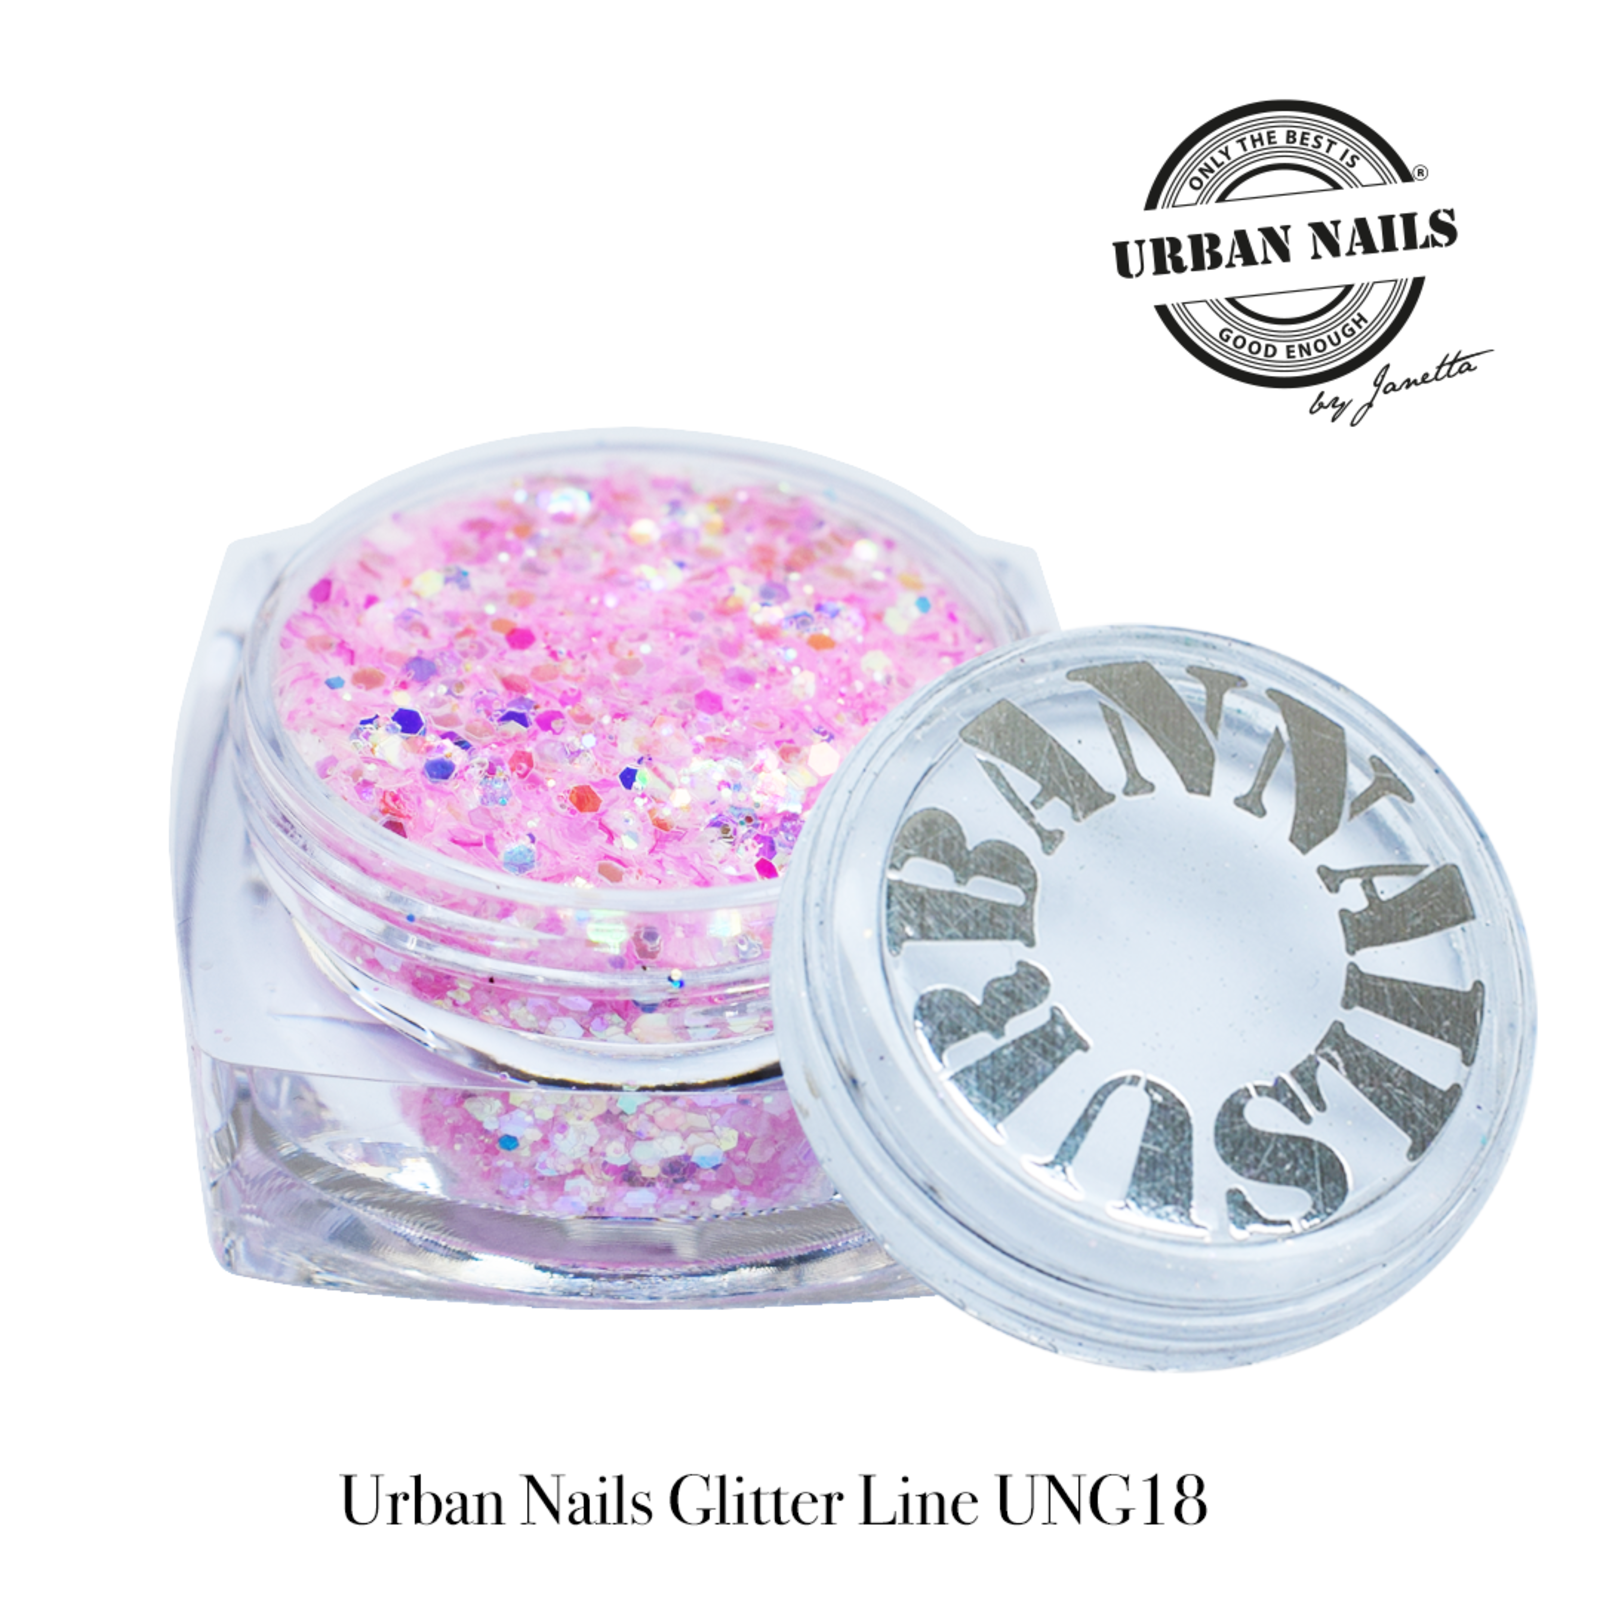 Urban nails Glitter Line UNG18